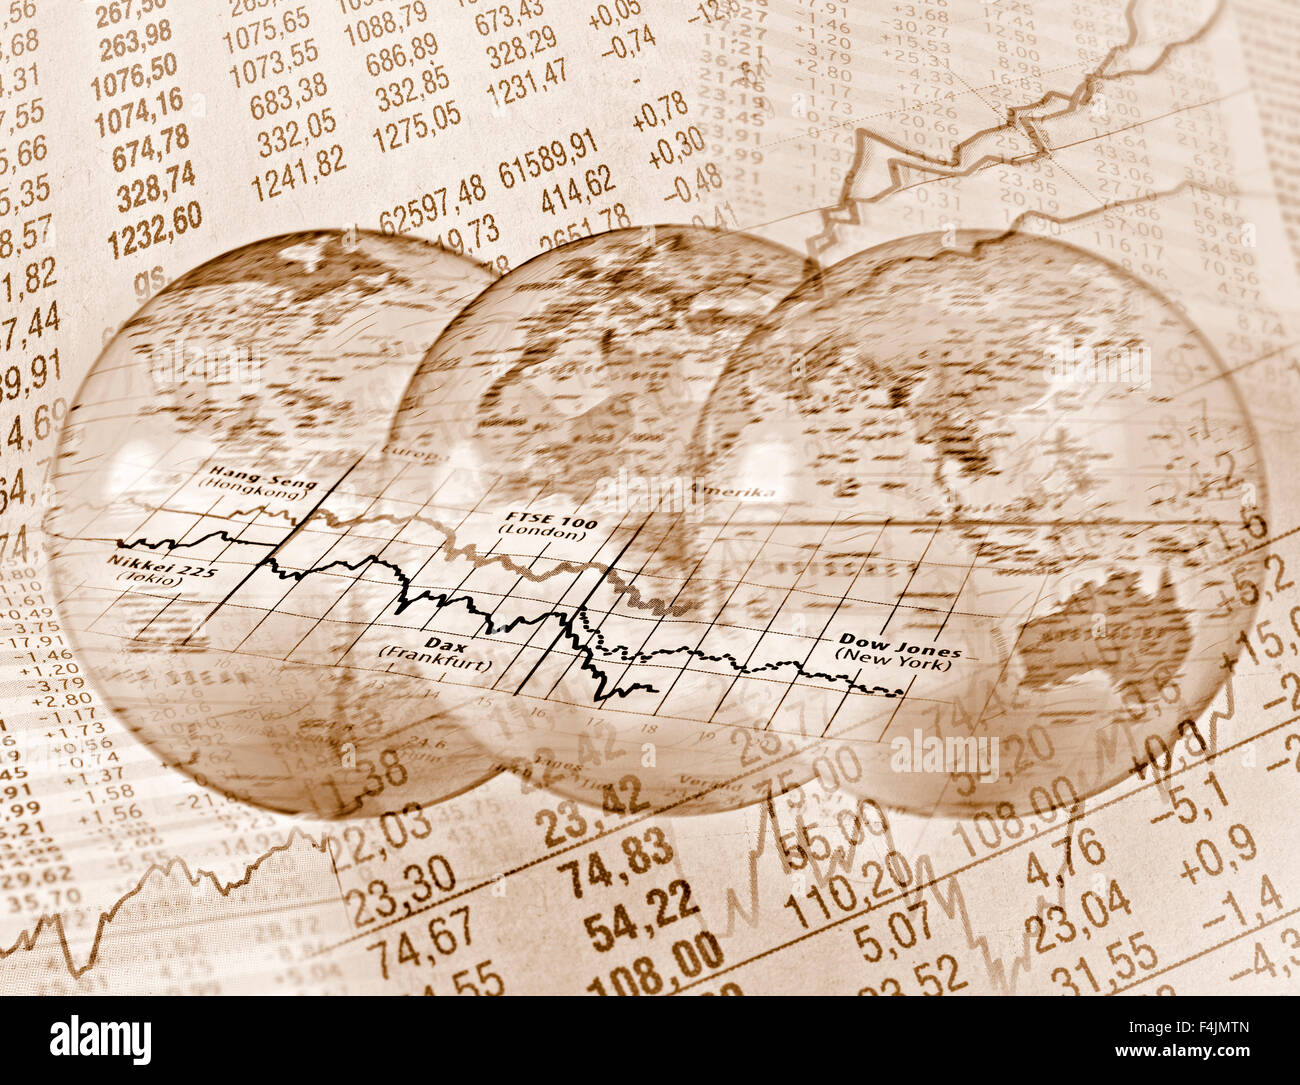 Global Stock Trading Stock Photo